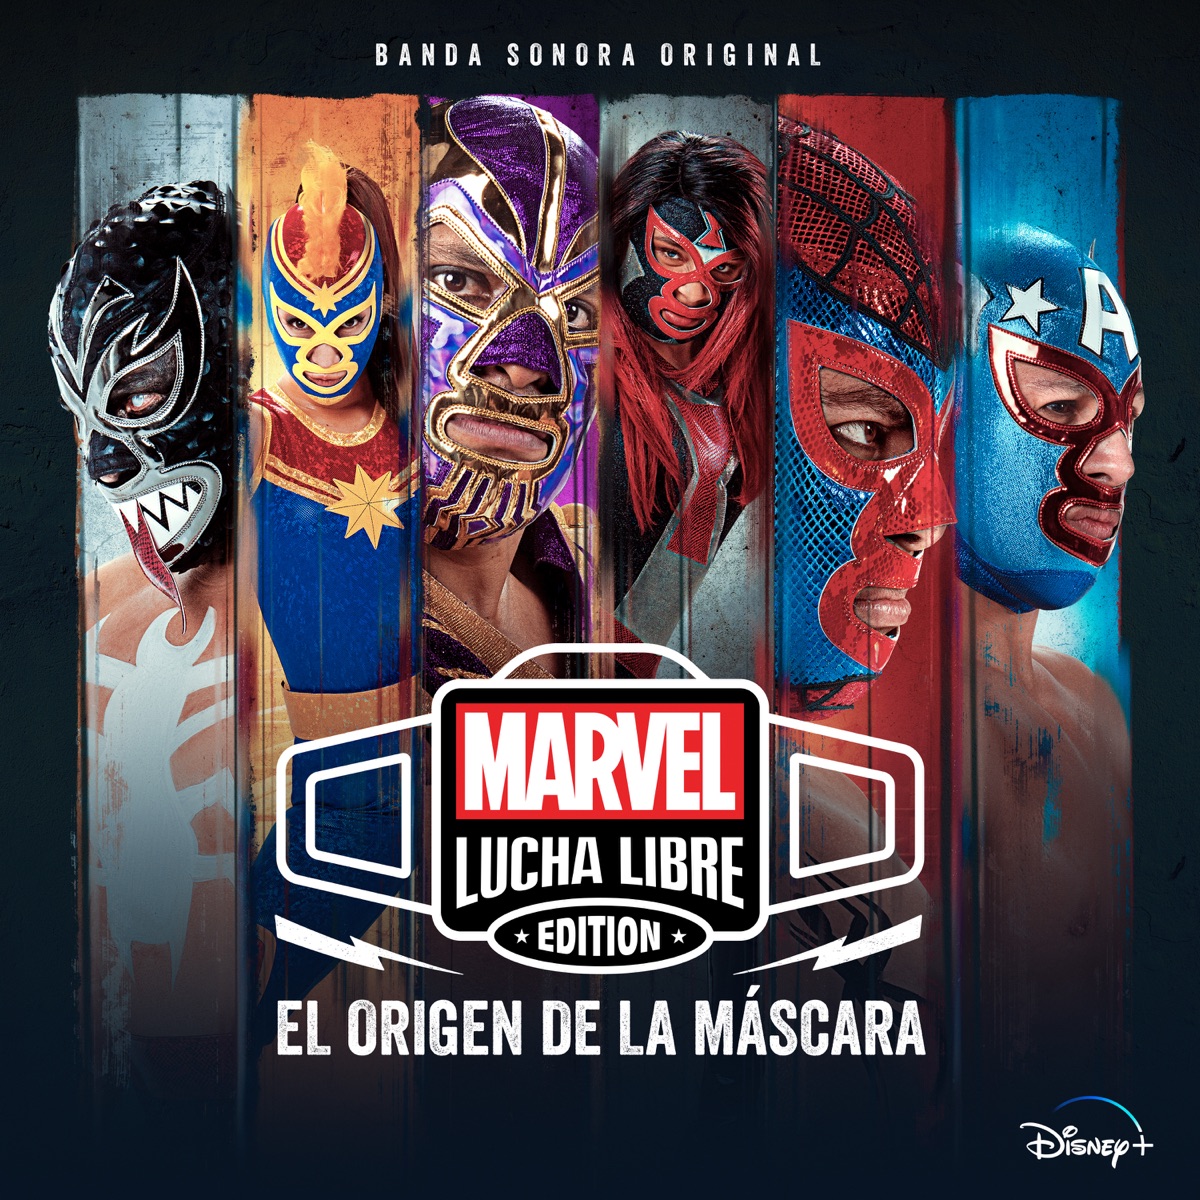 MARVEL lucha libre edition